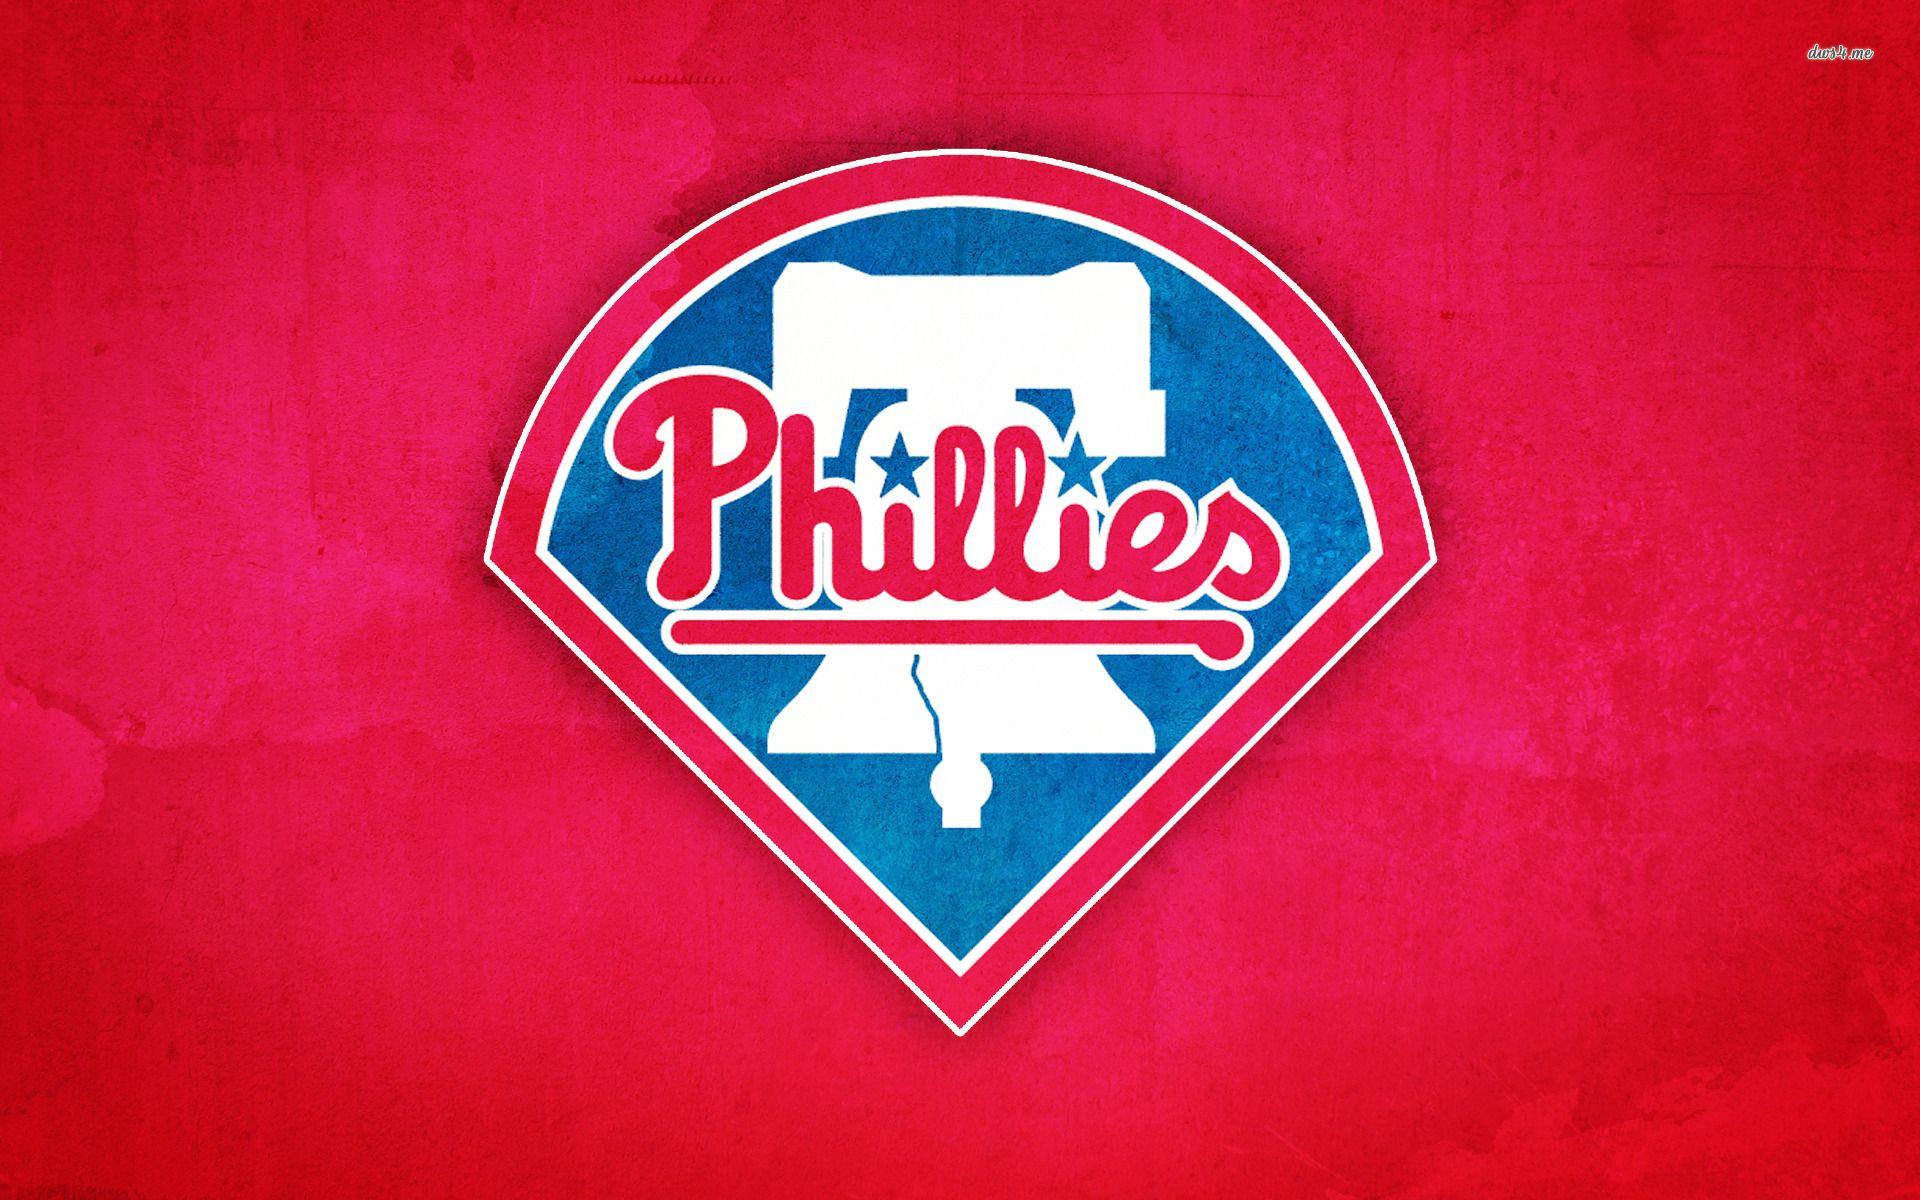 Phillies Wallpaper Phillies. Phillies, Philadelphia phillies logo, Philadelphia phillies